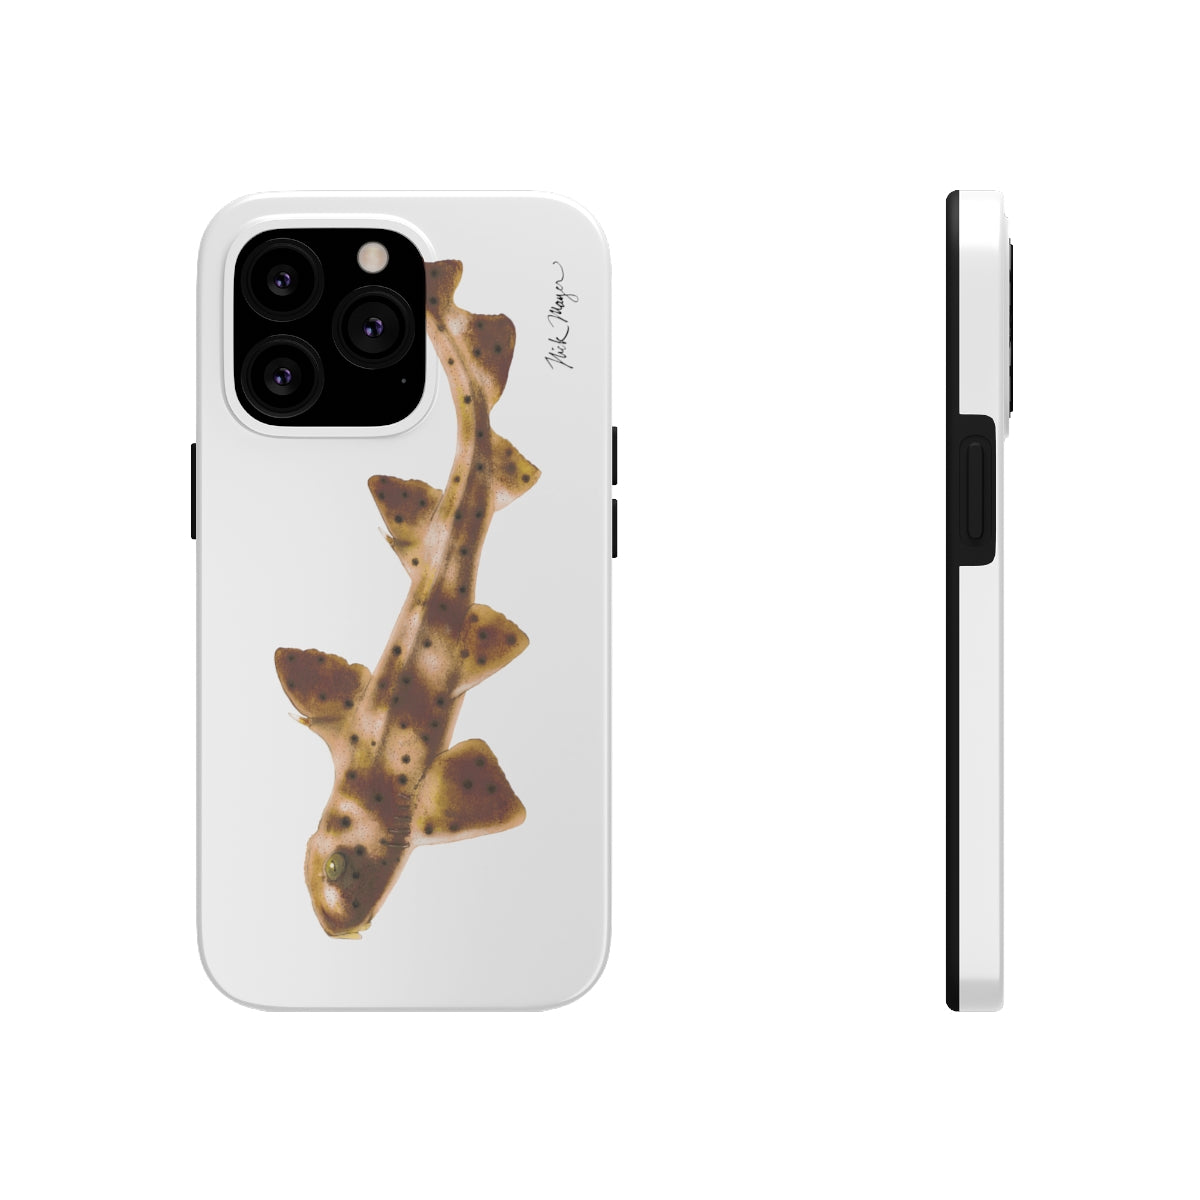 Horn Shark Phone Case (iPhone)